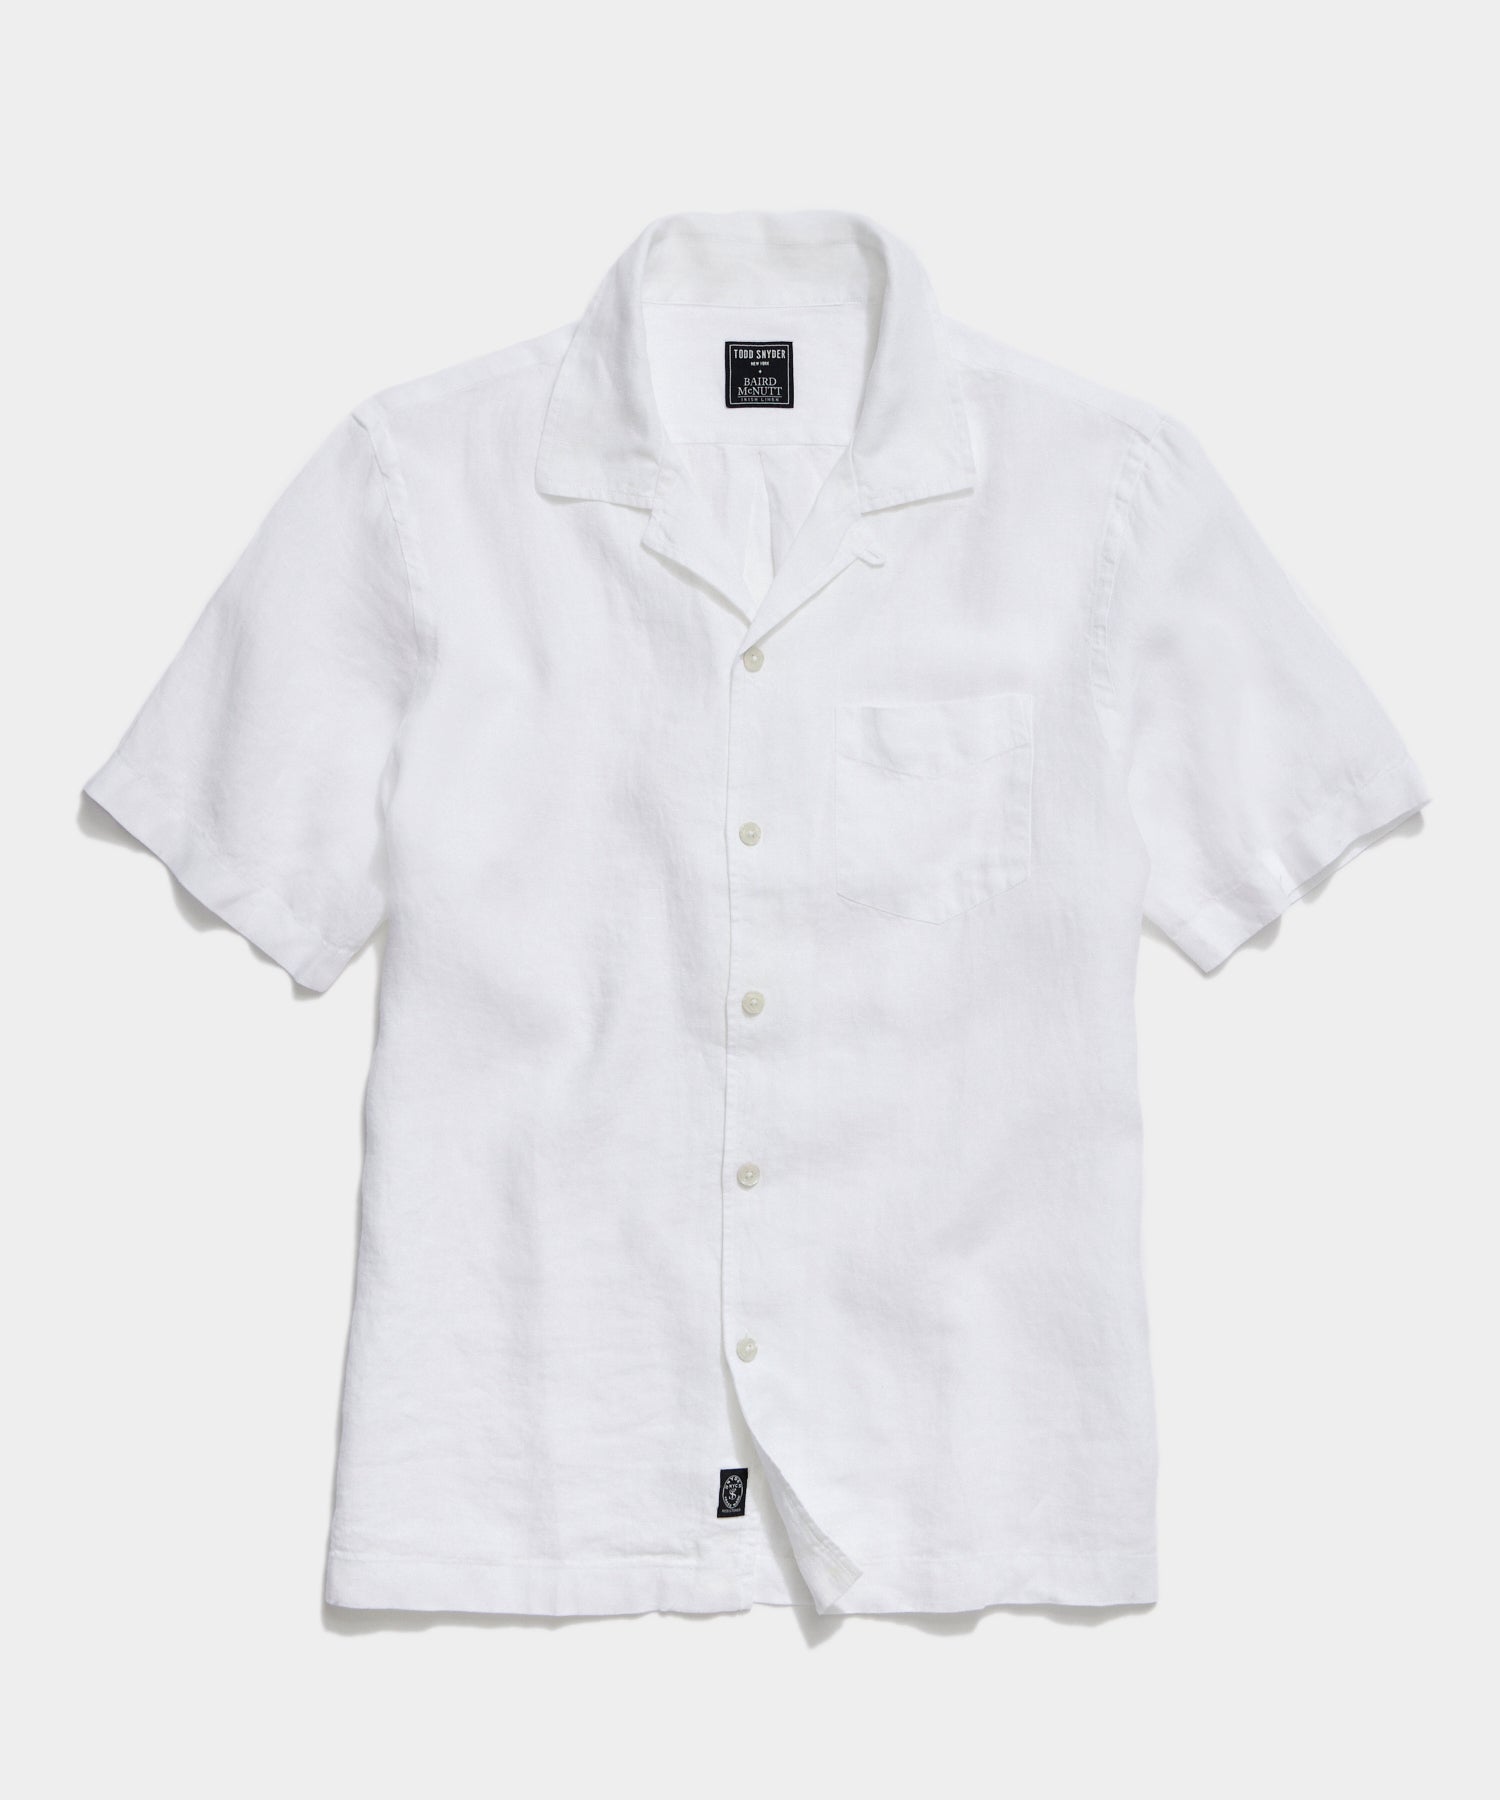 Sea Soft Irish Linen Camp Collar Short Sleeve Shirt in White